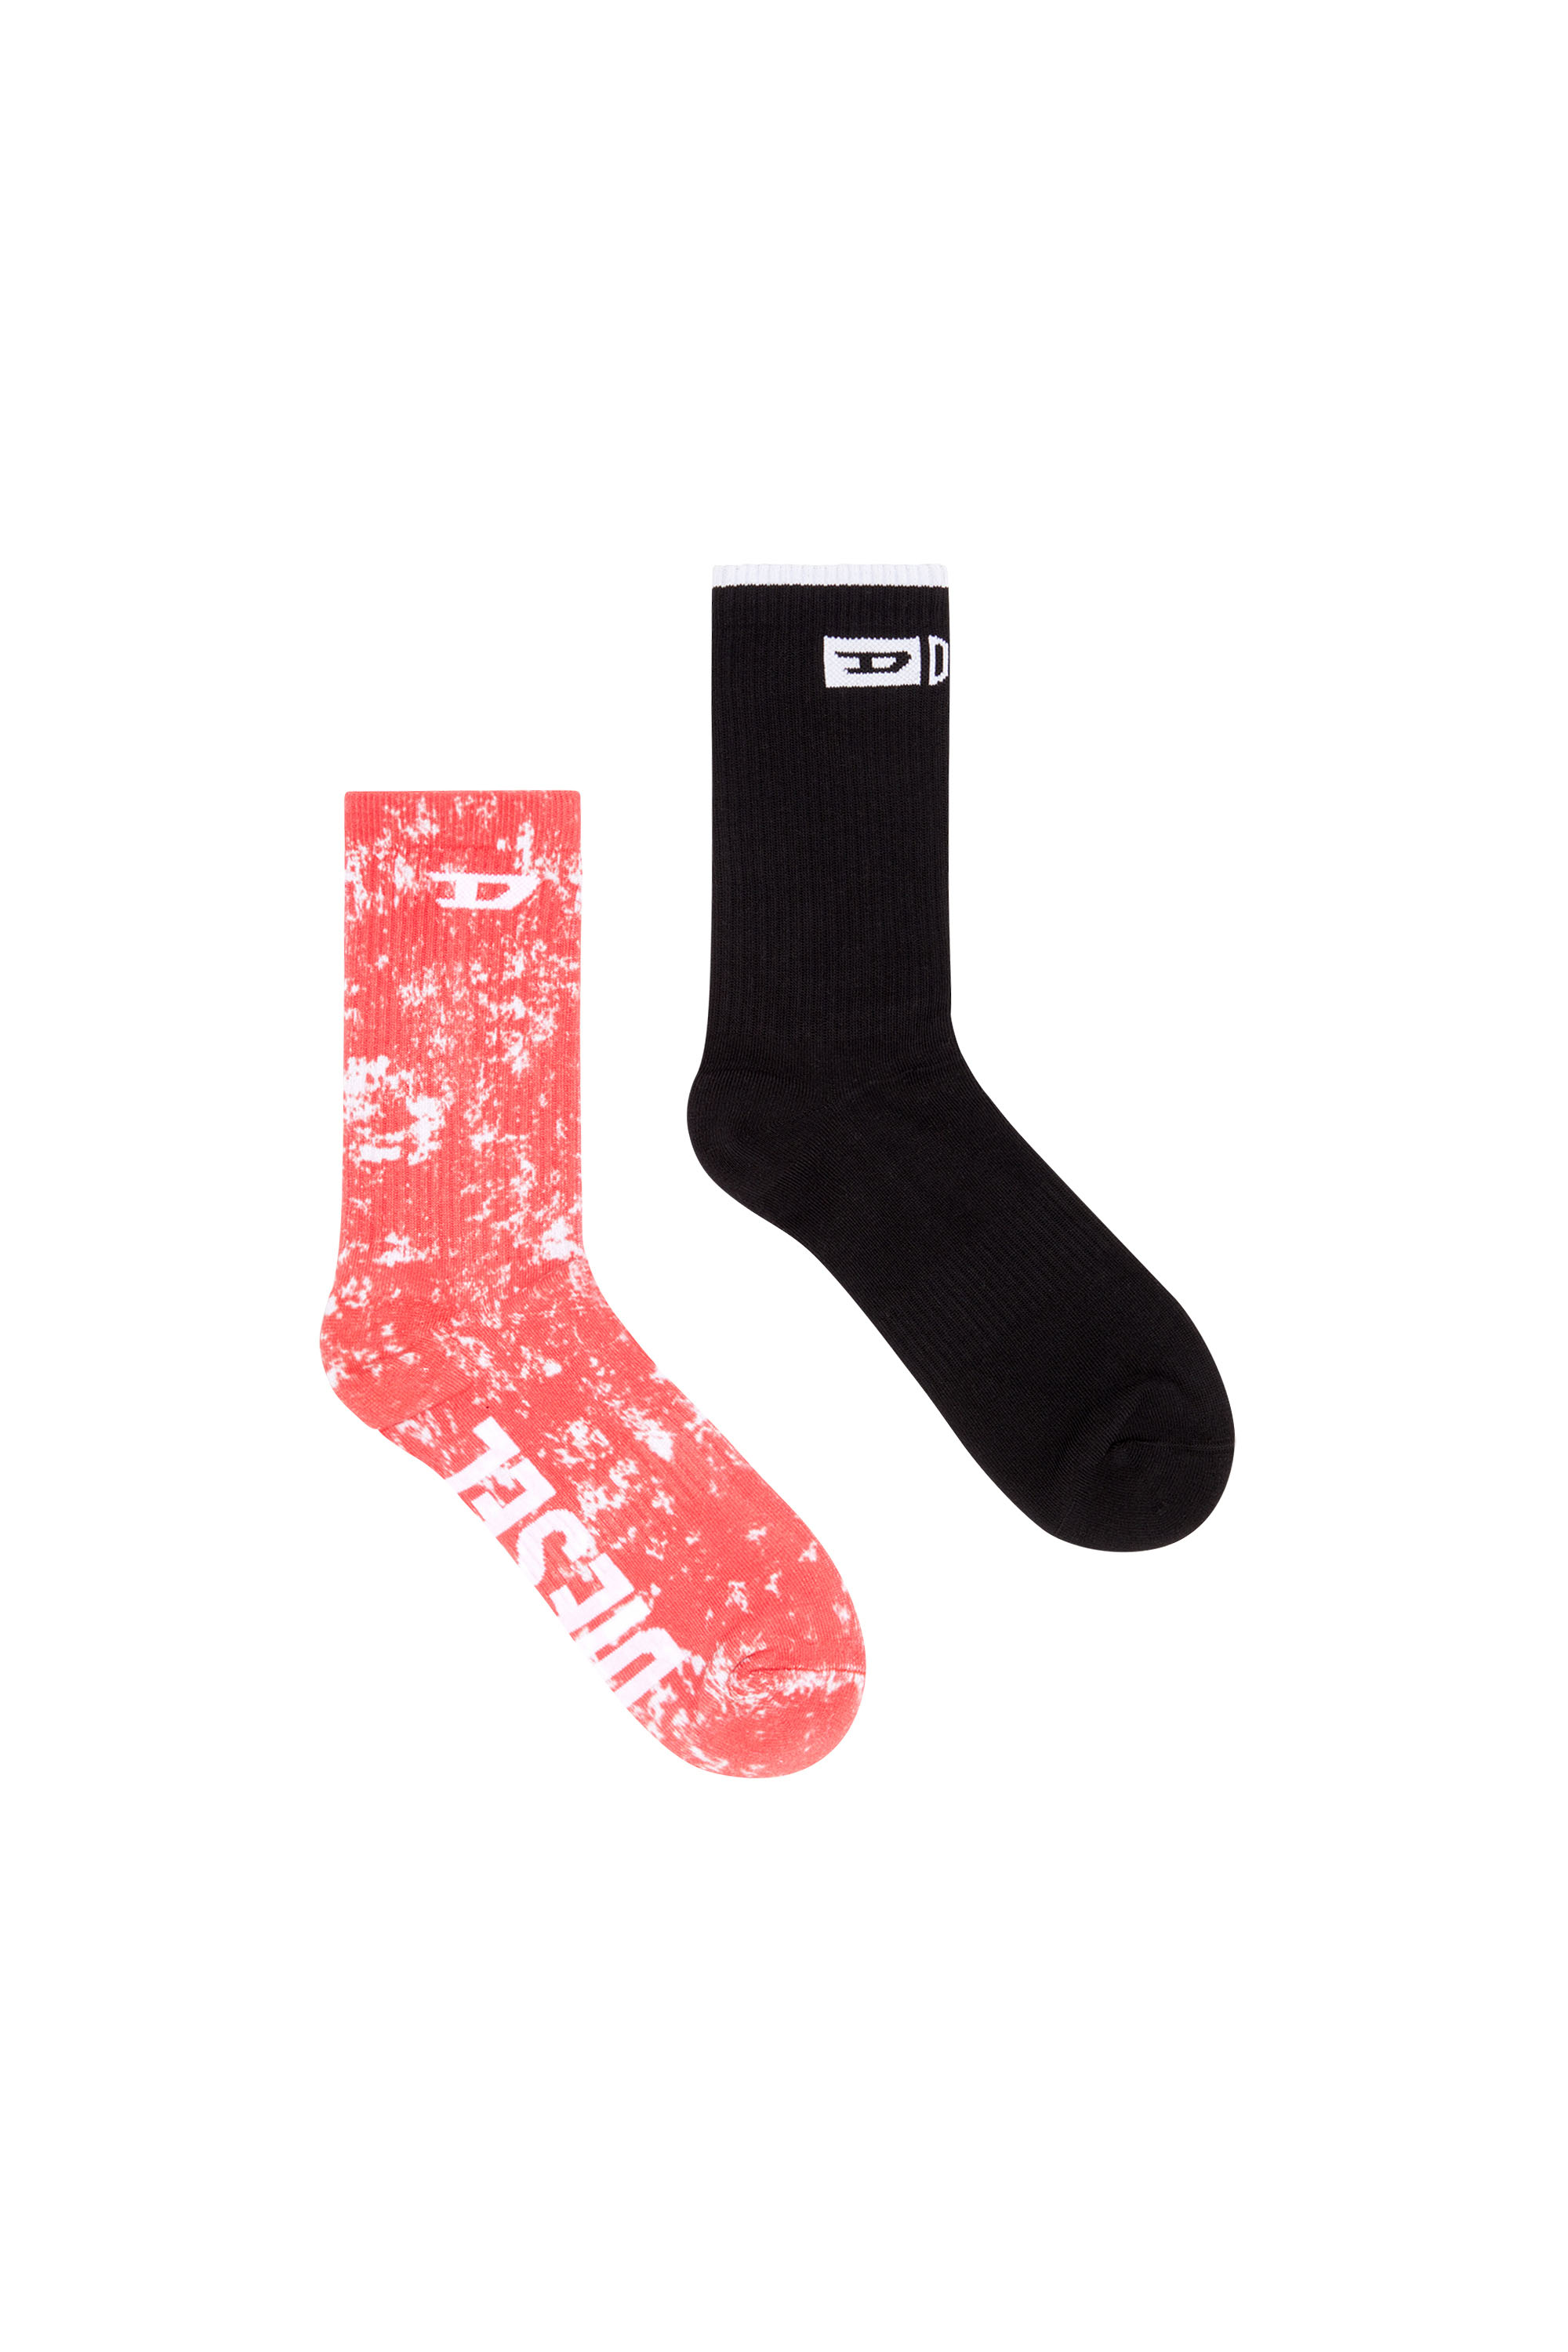 SKM-RAY-TWOPACK, Black/Red - Socks